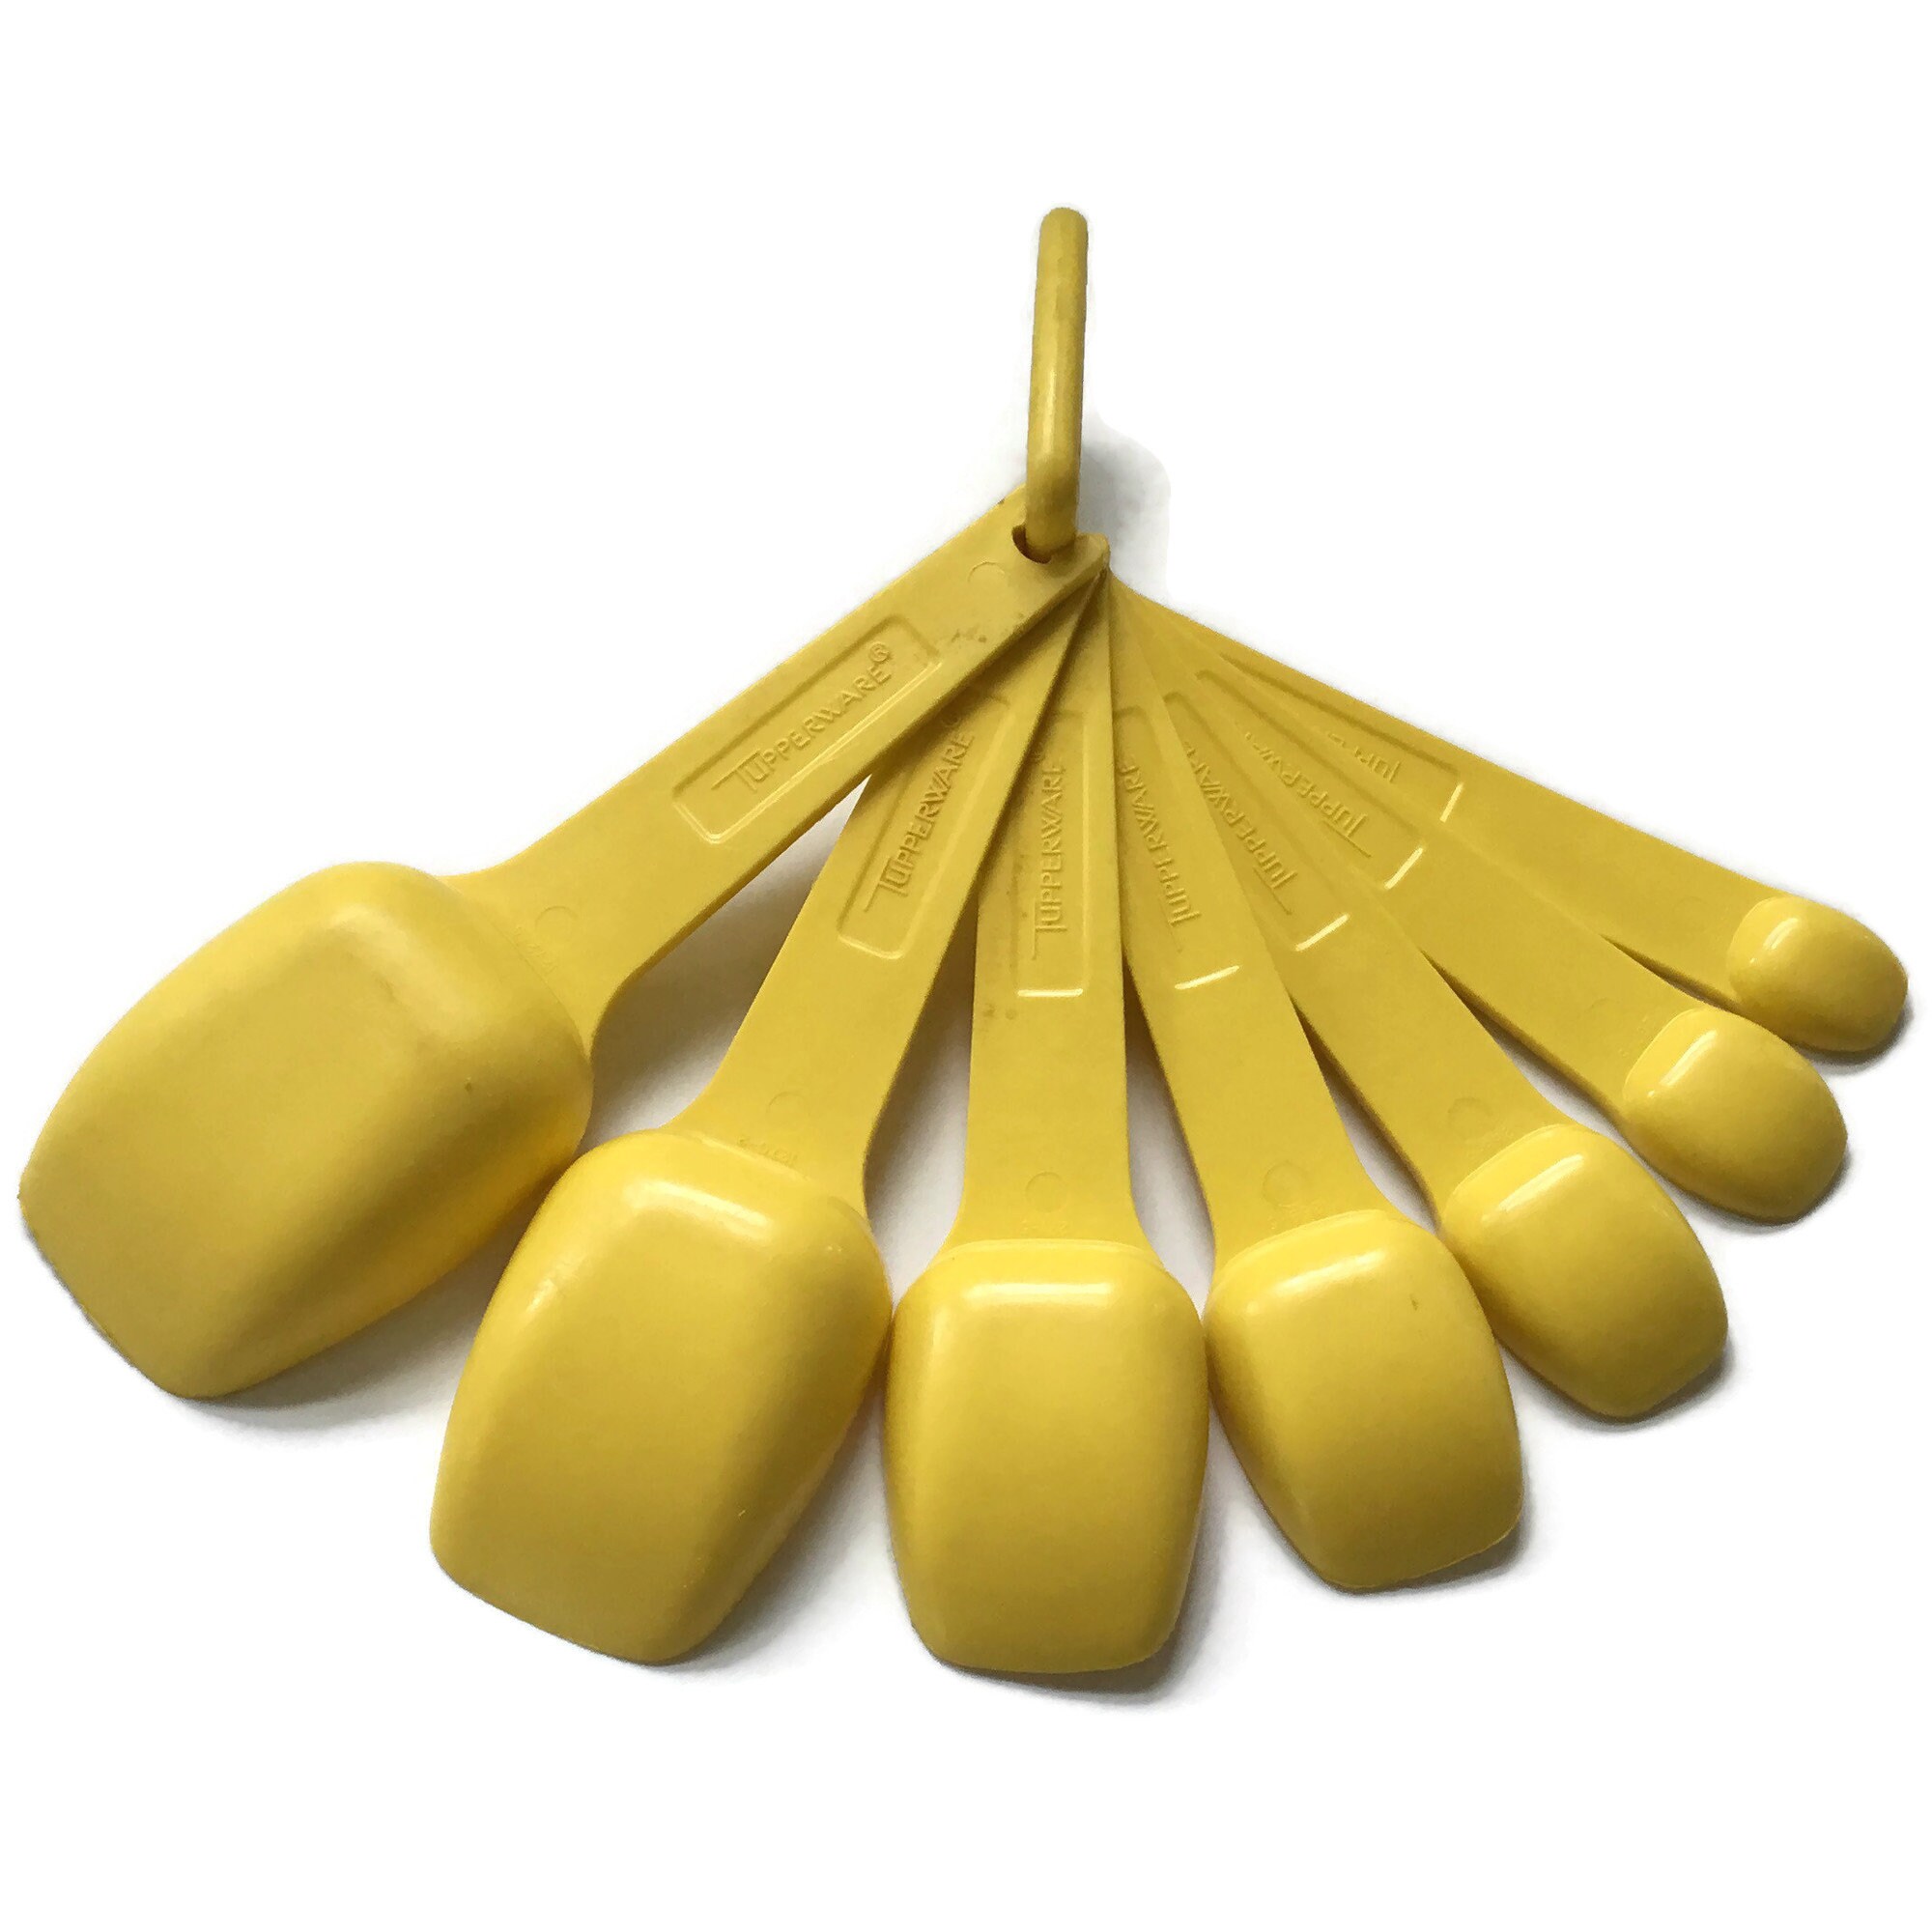 Vintage Tupperware Measuring Spoons Citrus Yellow Set of 7 